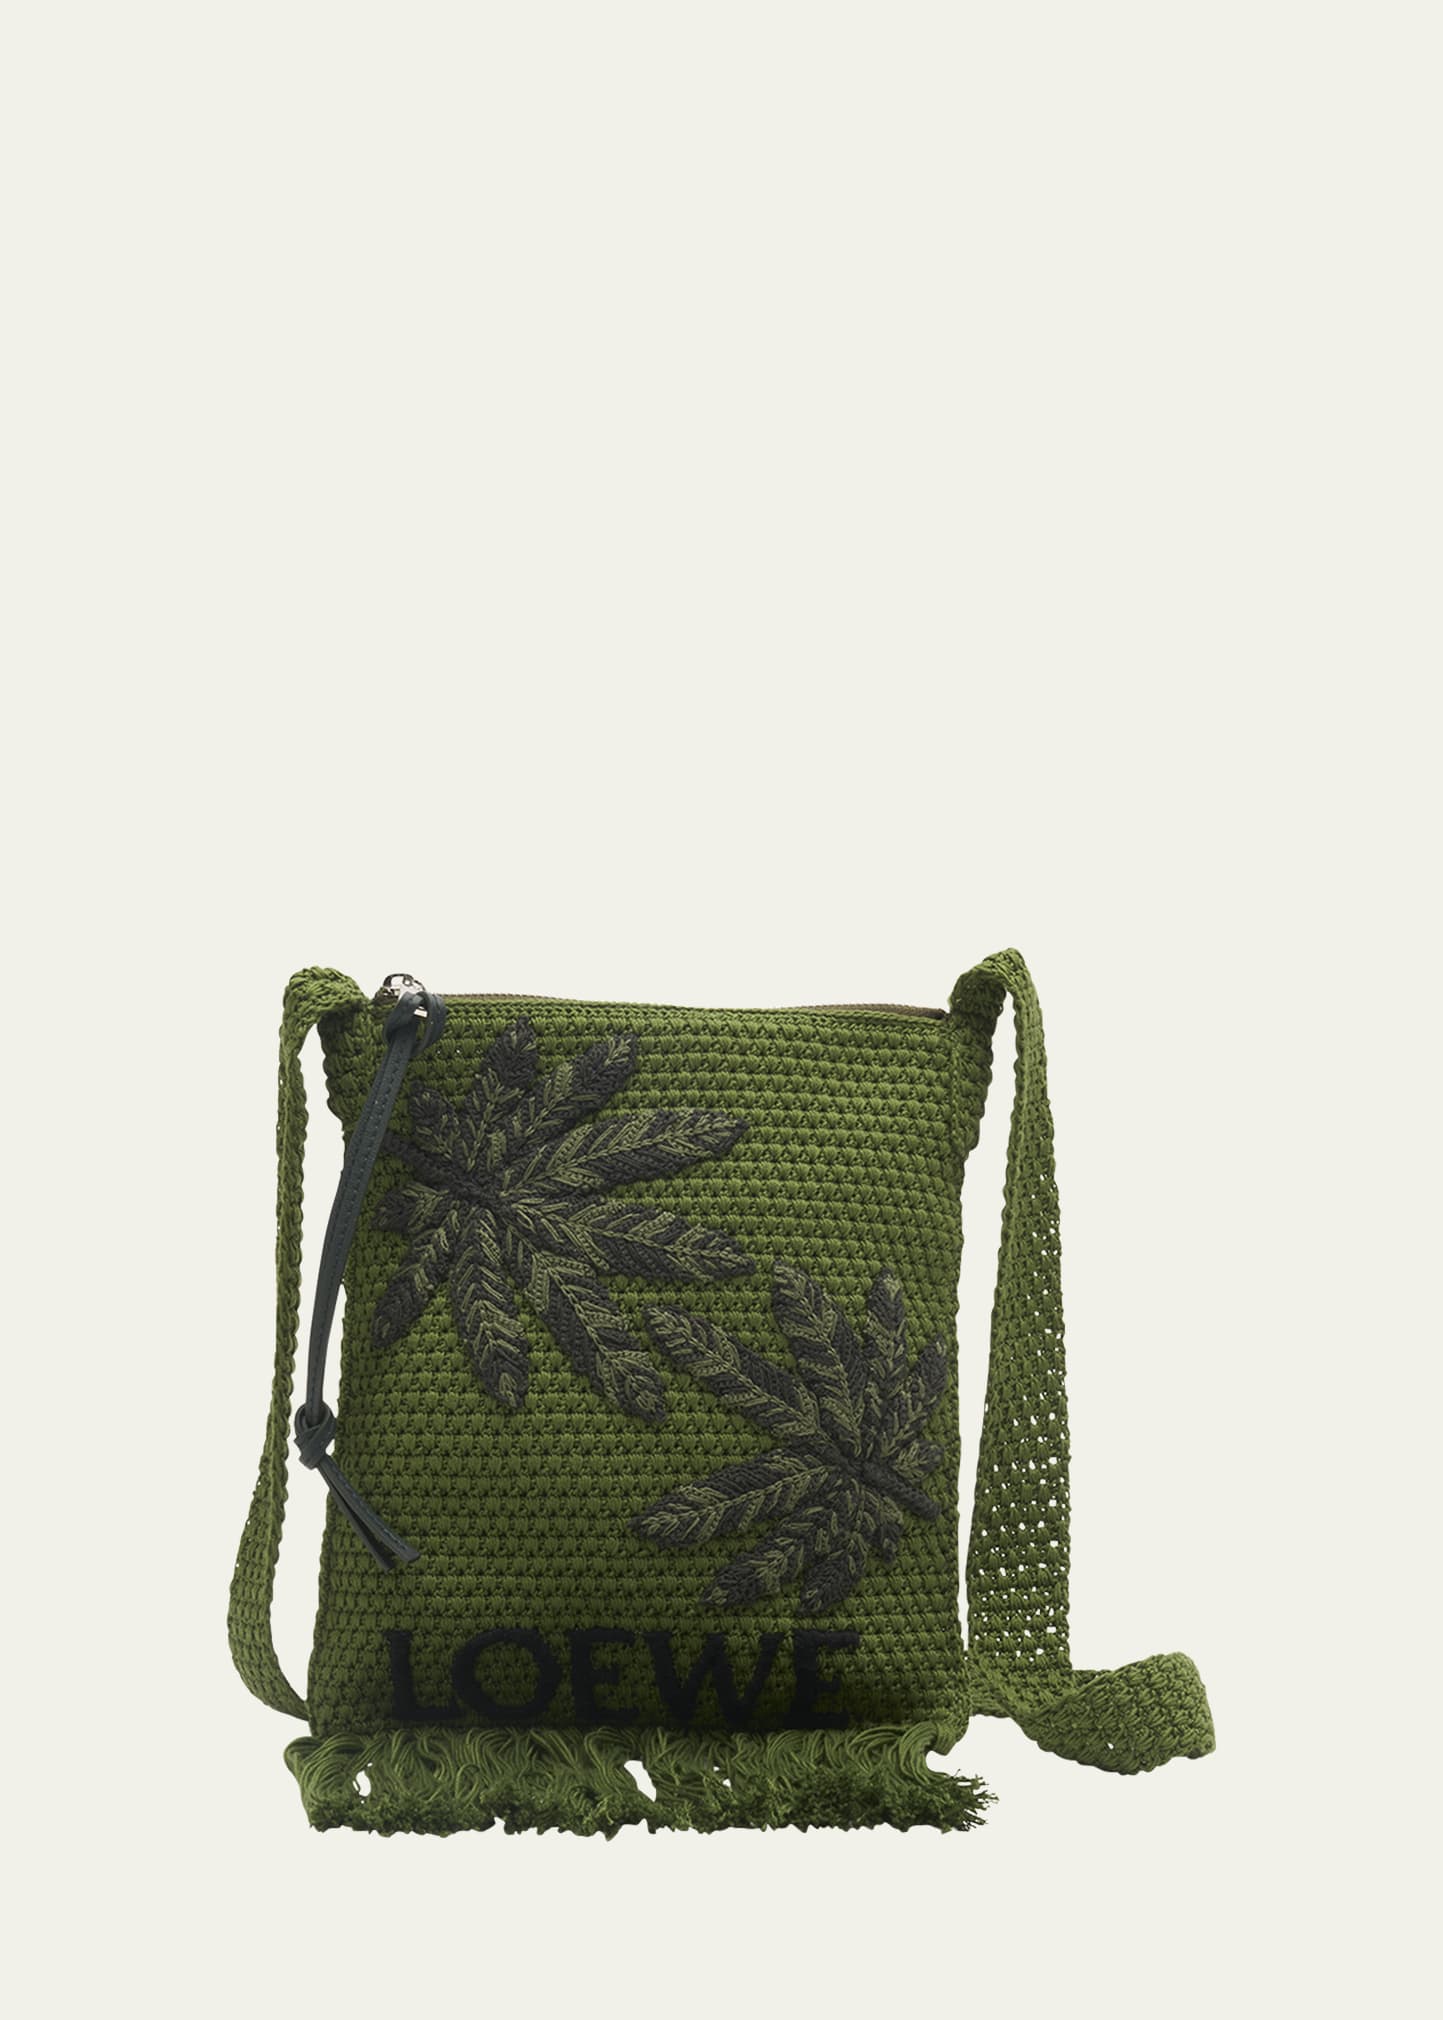 Loewe  Designer Bags, Clothing, Accessories for Women & Men